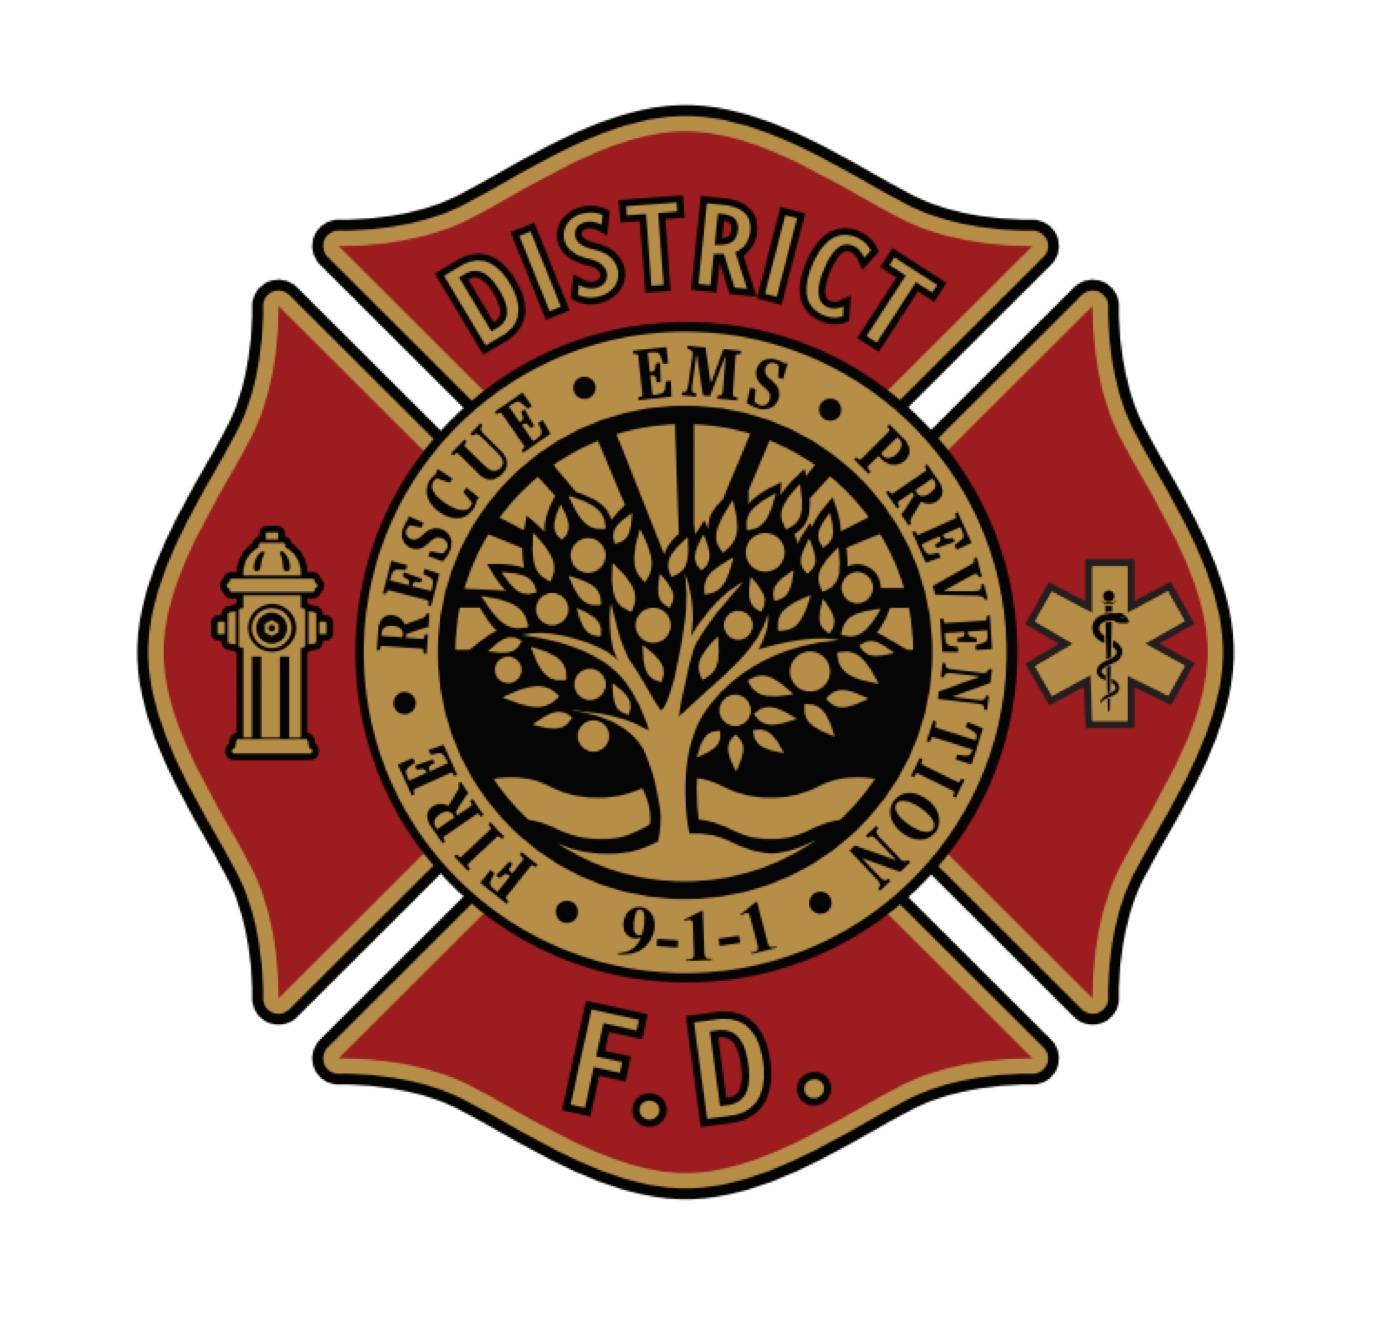 New District Fire Department logo via @LandonProducer on X